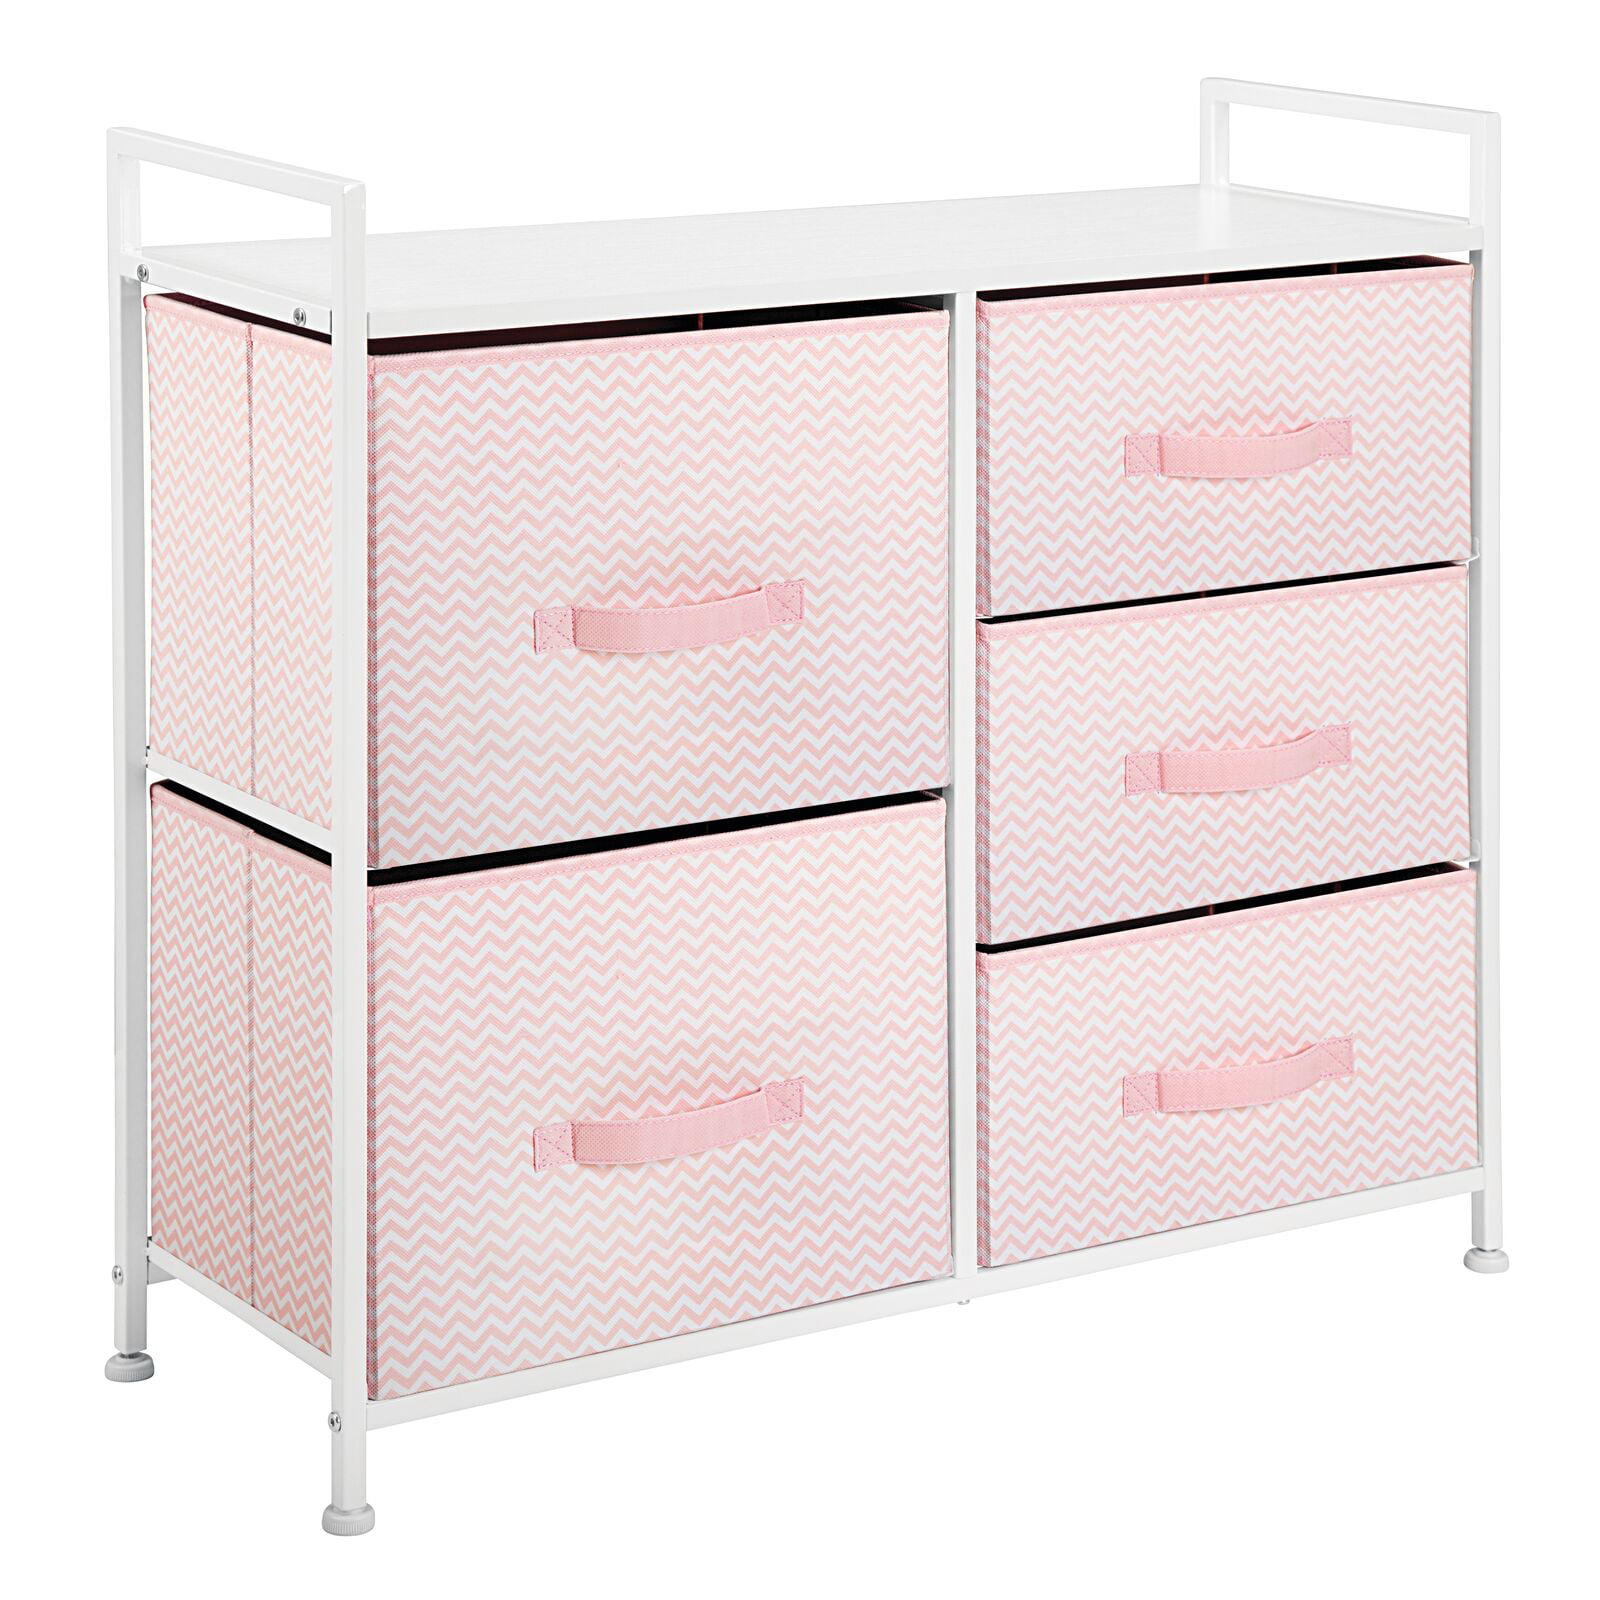 Set of 5 Organizers Pink/White mDesign Soft Fabric Dresser Drawer and Closet Storage Organizer Set for Child/Baby Room or Nursery 